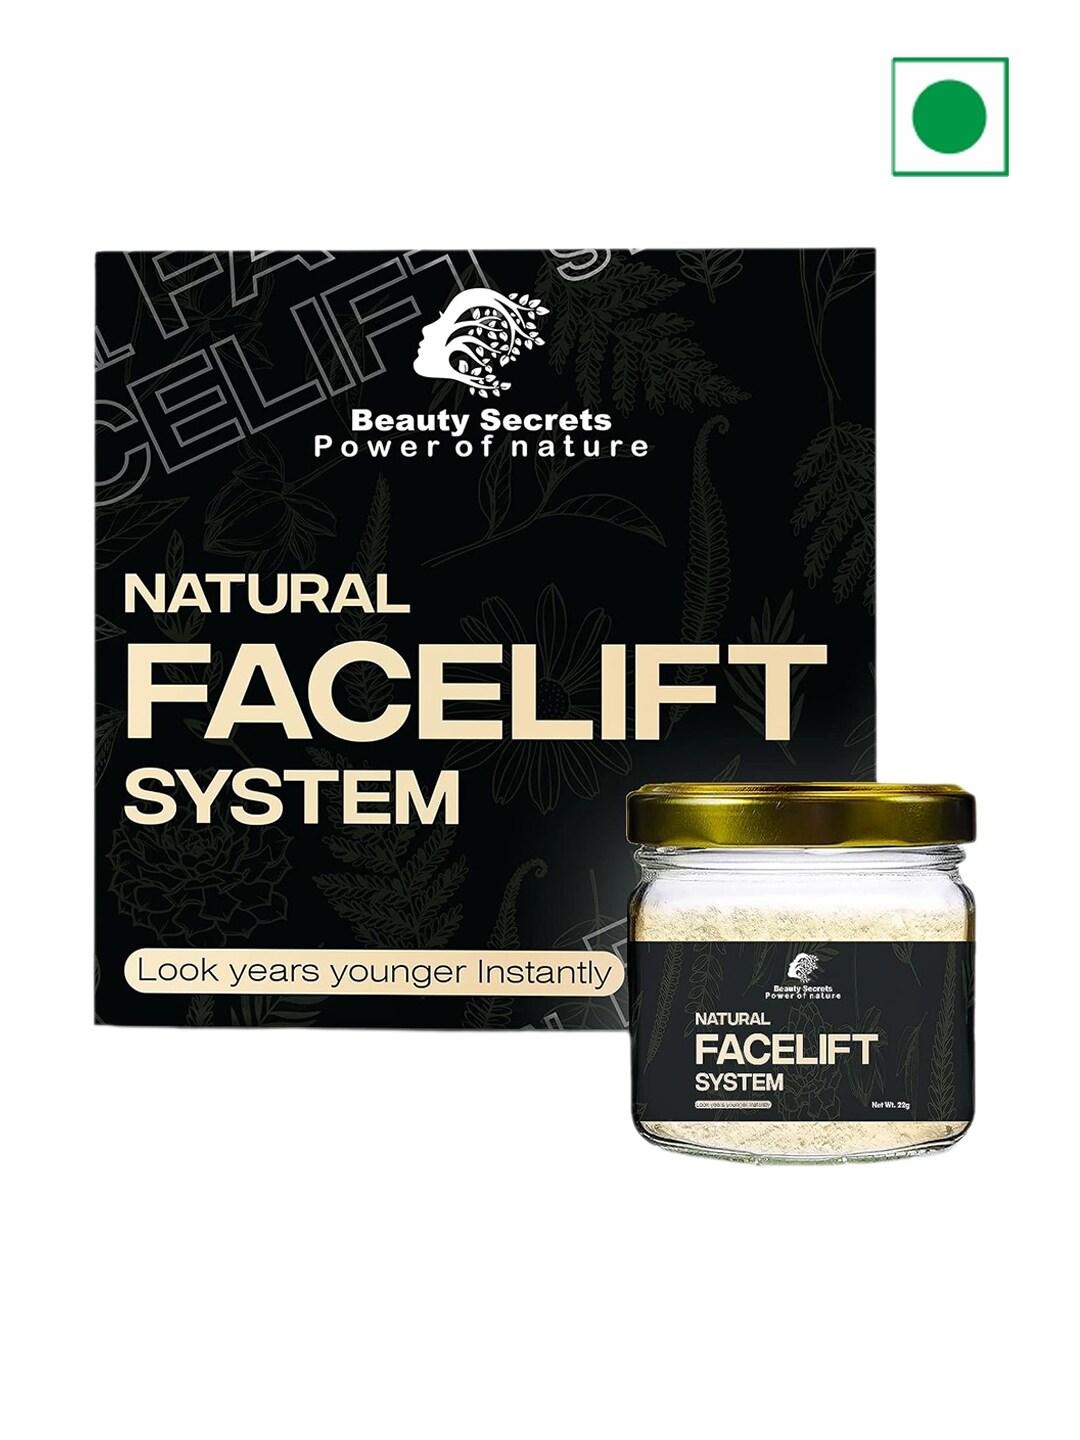 Beauty Secrets Natural Facelift System Face Mask - 22g